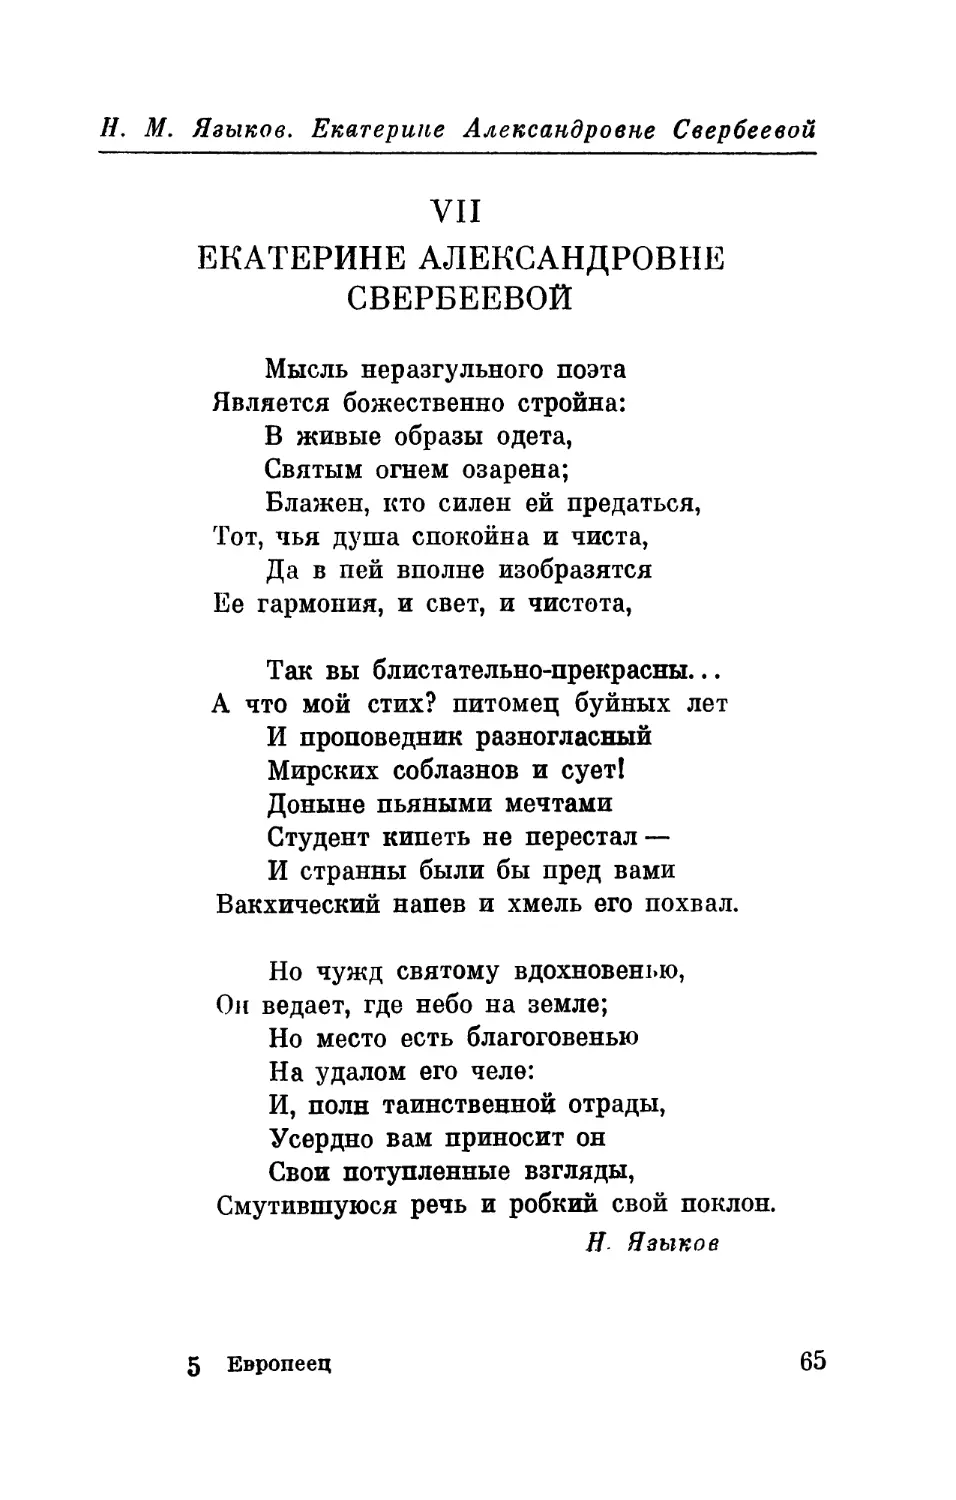 VII. Н. М. Языков. Екатерине Александровне Свербеевой